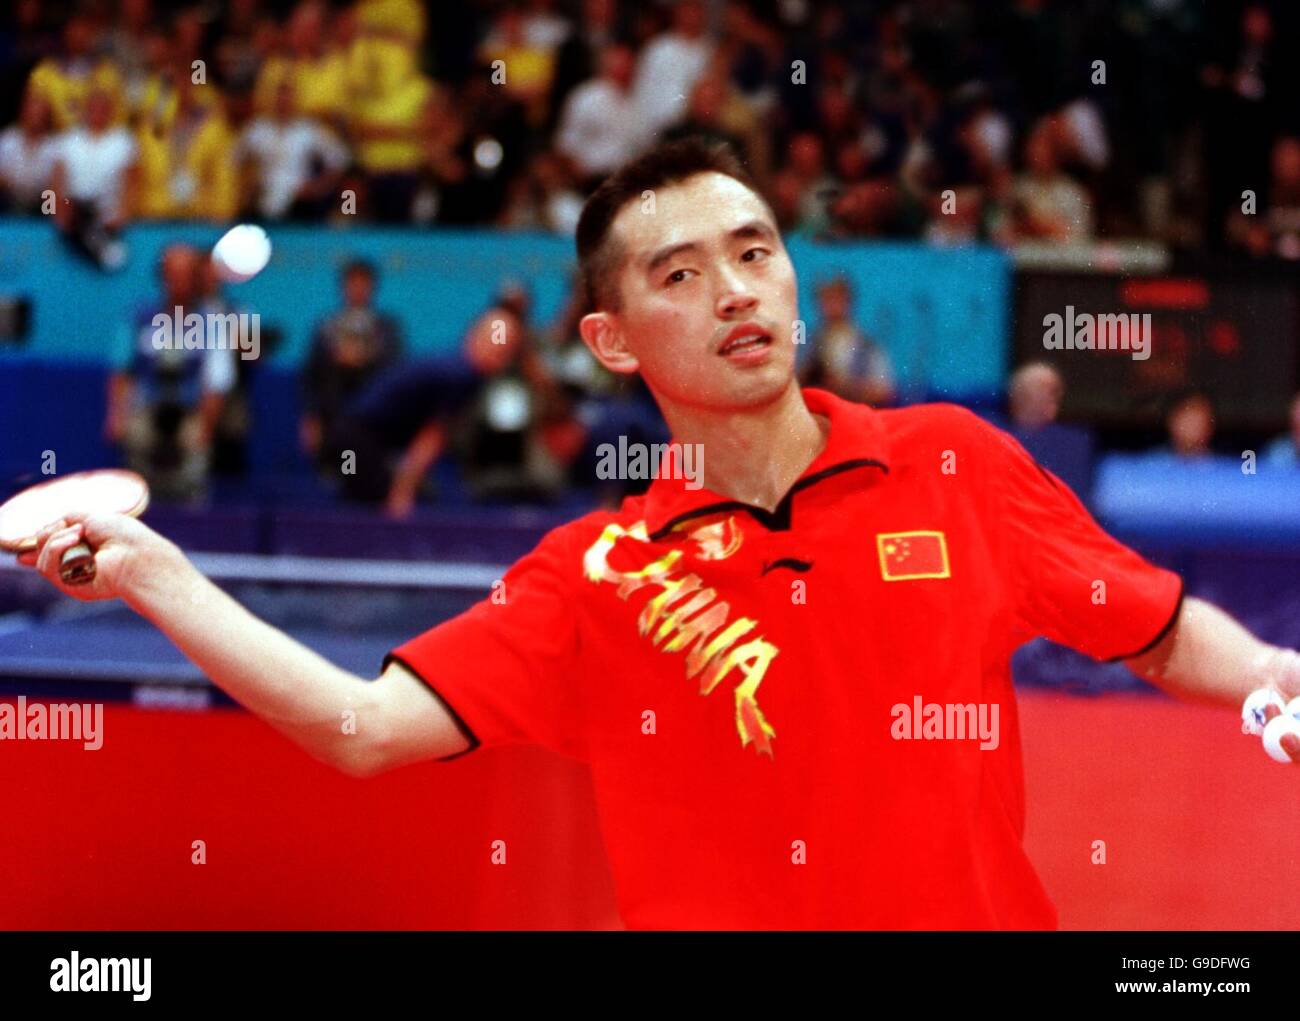 Sydney 2000 Olympics Table Tennis Mens Singles Finals Chinas Linghui G9DFWG 